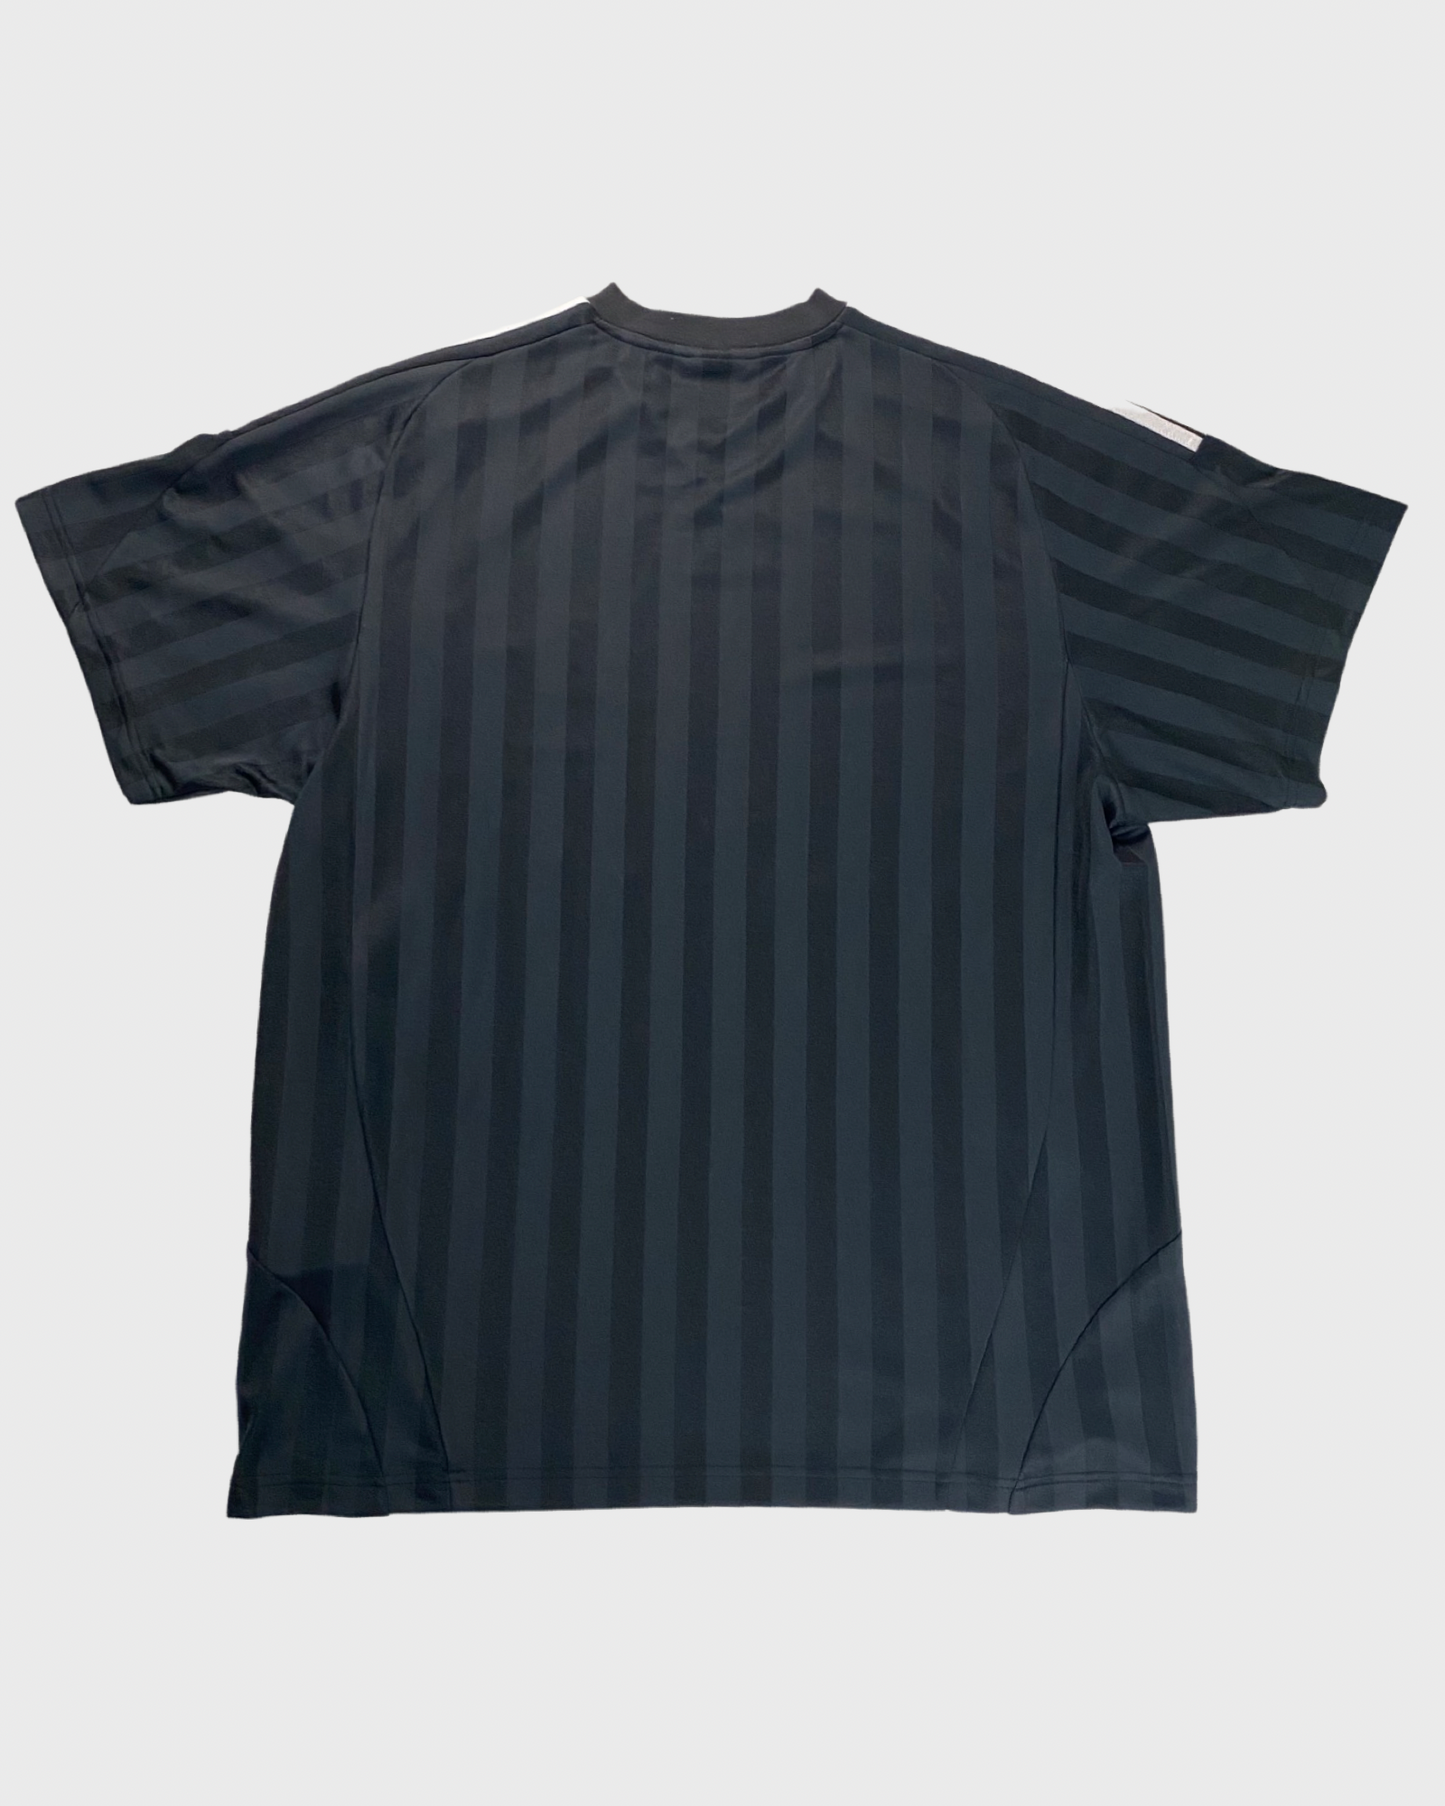 Balenciaga x Adidas Spring 23 black & grey striped football soccer jersey kit SZ:1